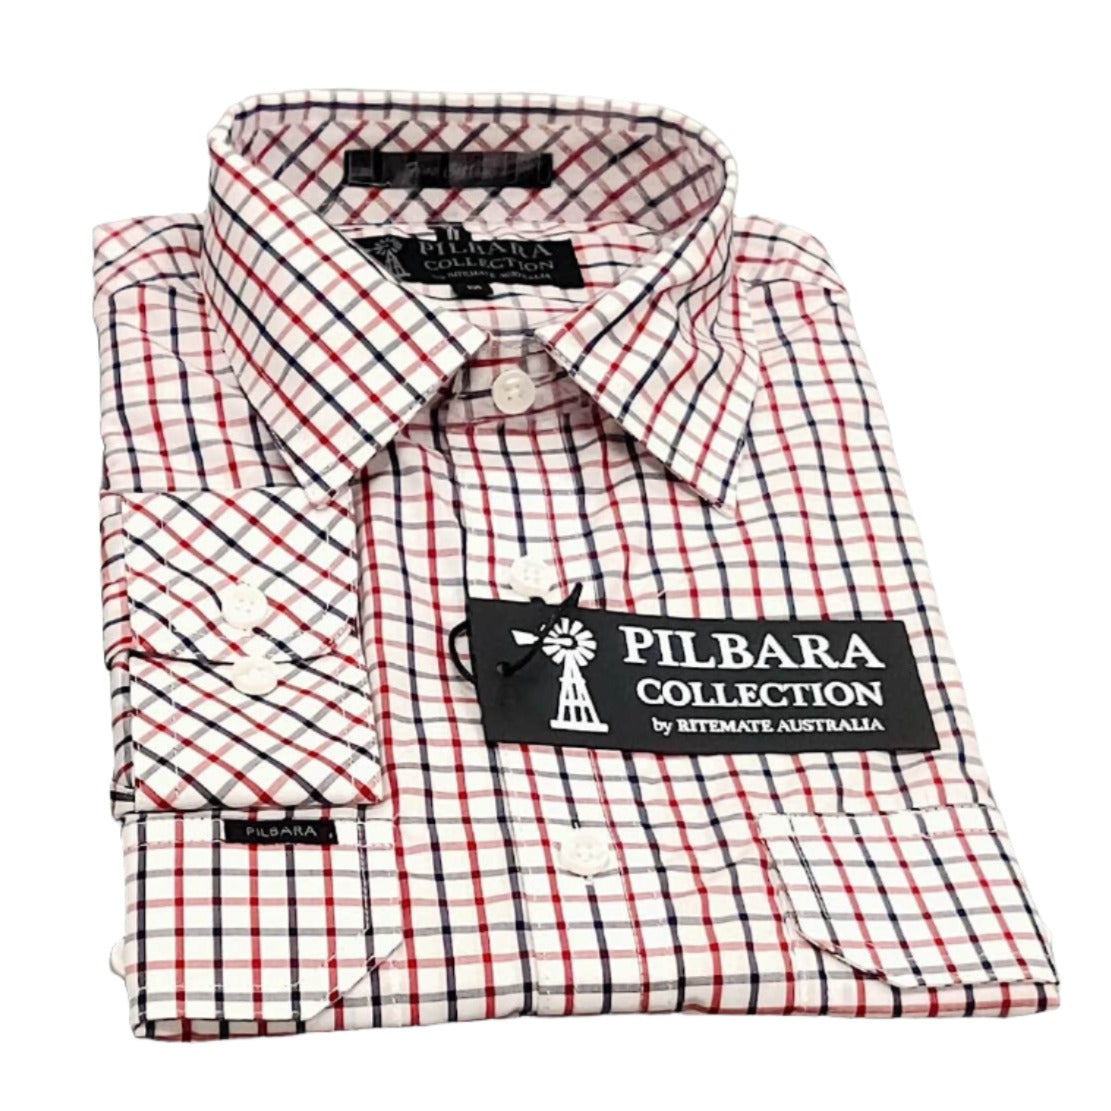 Pilbara Mens Check Dual Pocket L/S Shirt Navy/Maroon/White